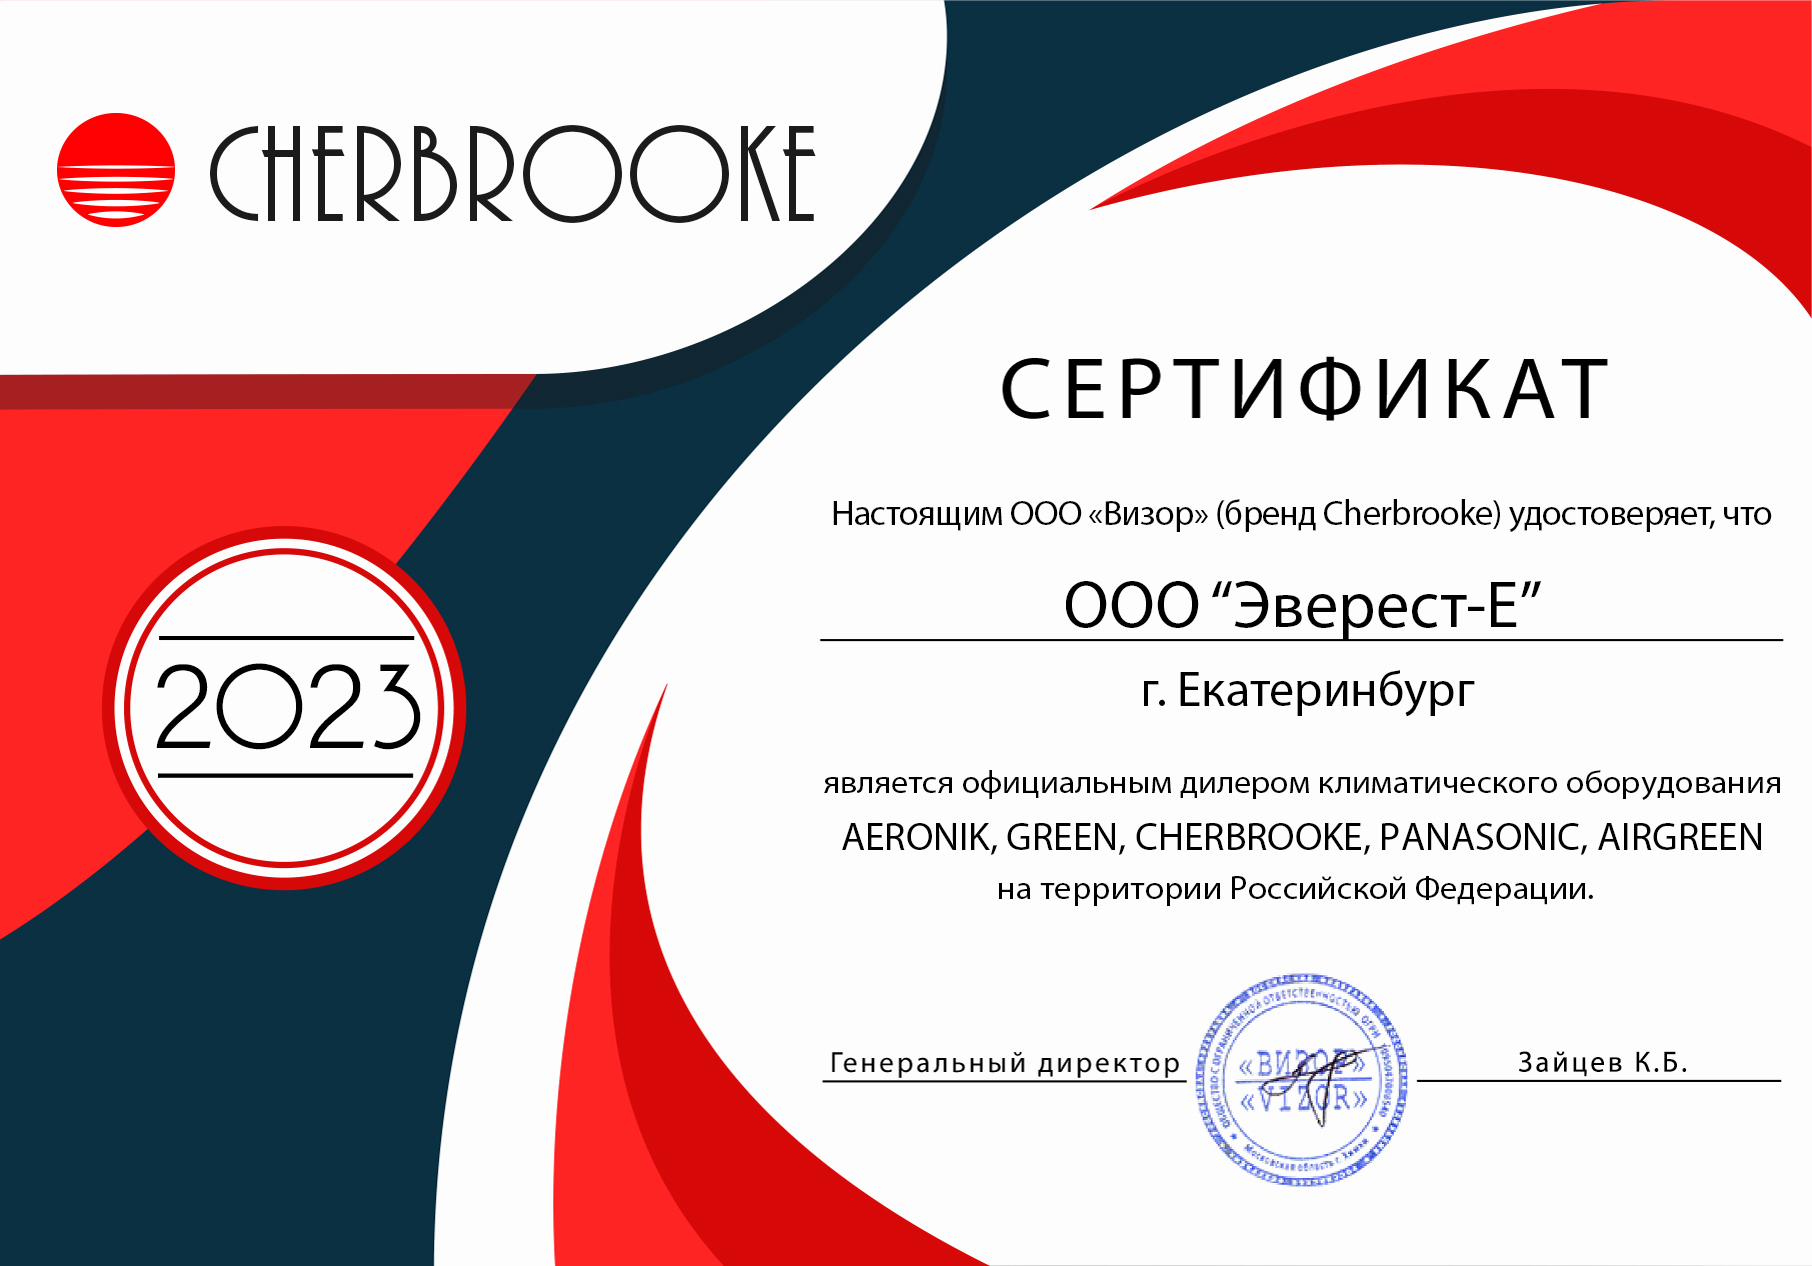 sert_cherbrooke-3 Kondicioner Panasonic CS-E18RKDW / CU-E18RKD kypit v Ekaterinbyrge v internet-magazine KlimatMarket96.ry Сертификат официального дилера